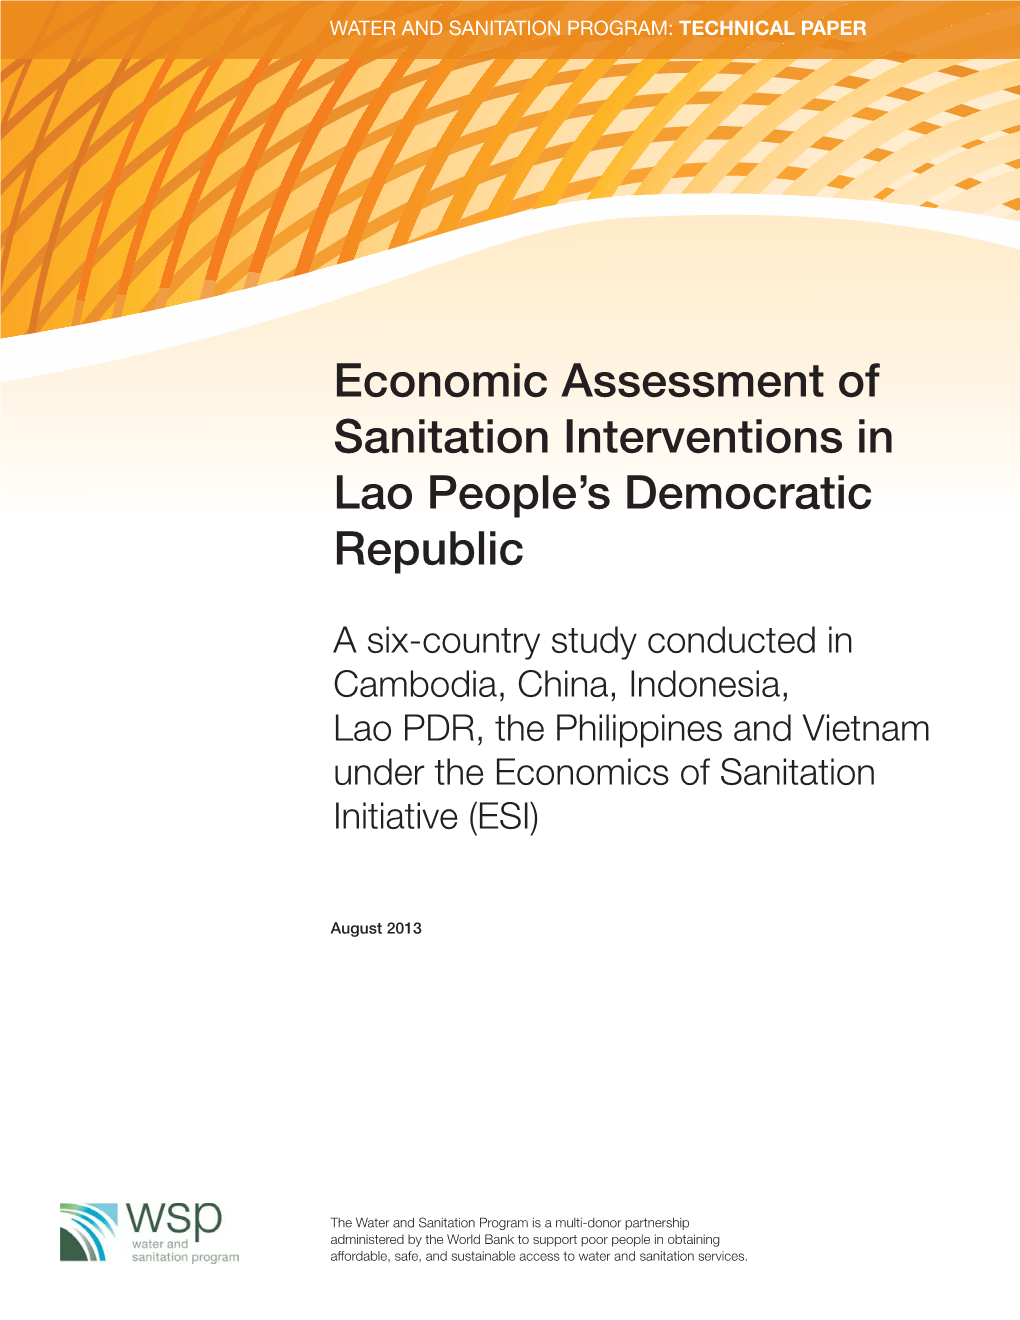 Economic Assessment of Sanitation Interventions in Lao People’S Democratic Republic